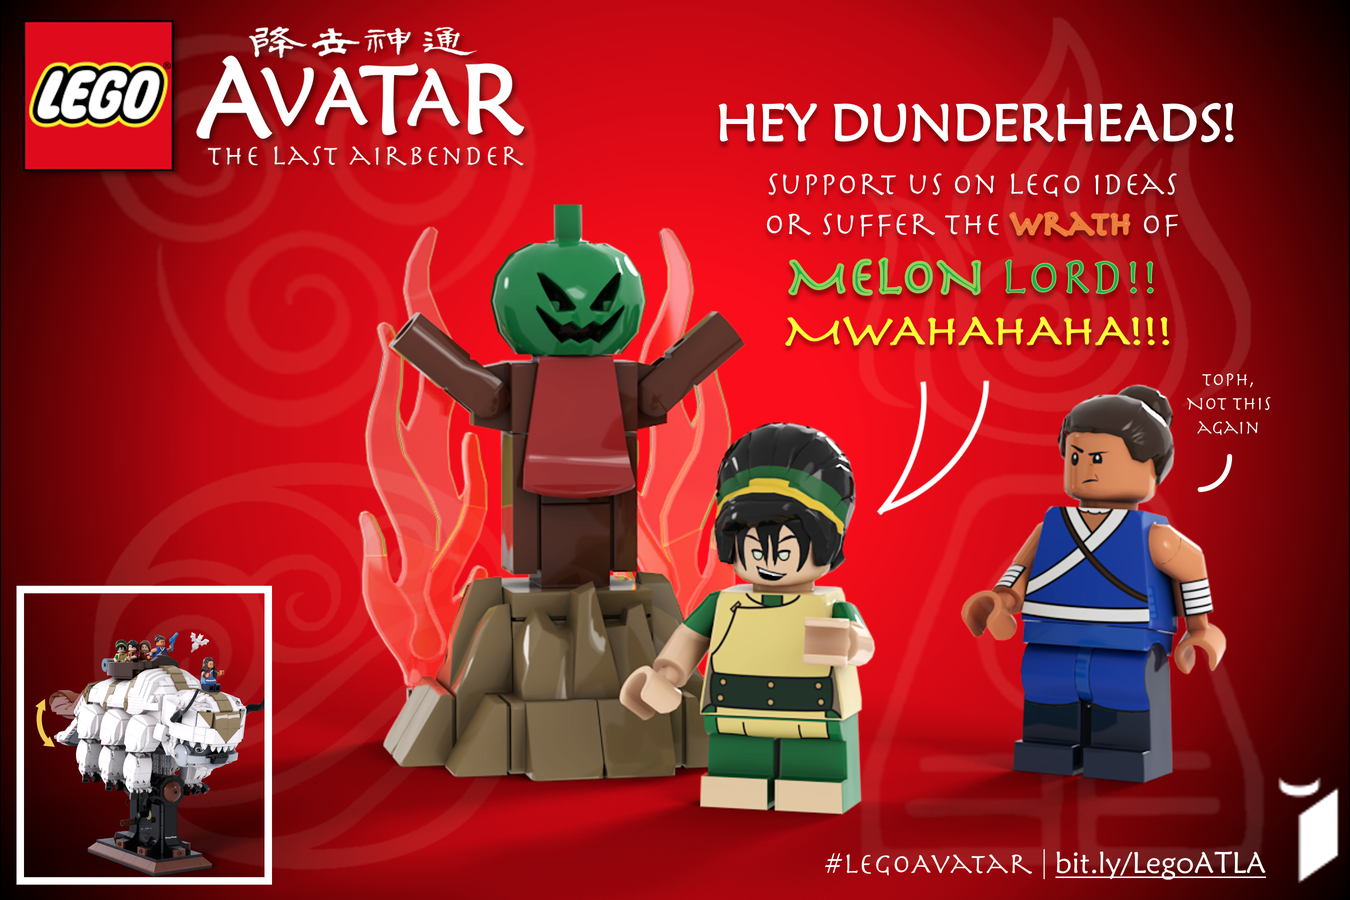 LEGO IDEAS - Avatar: The Last Airbender: The Gaang's Adventures